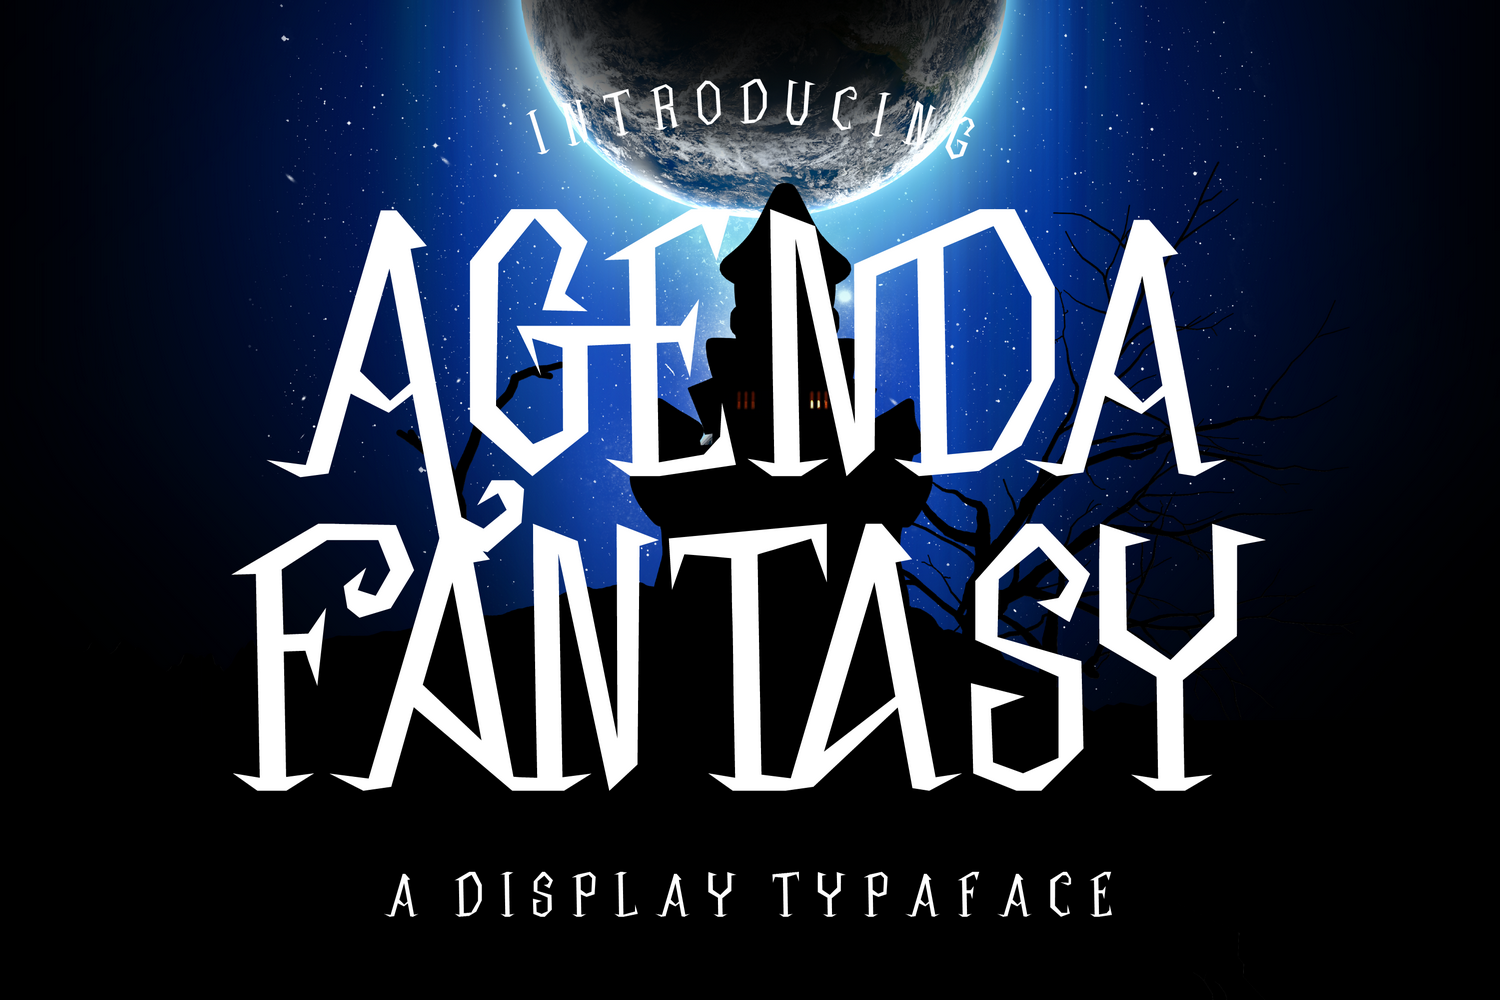 Agenda Fantasy Demo